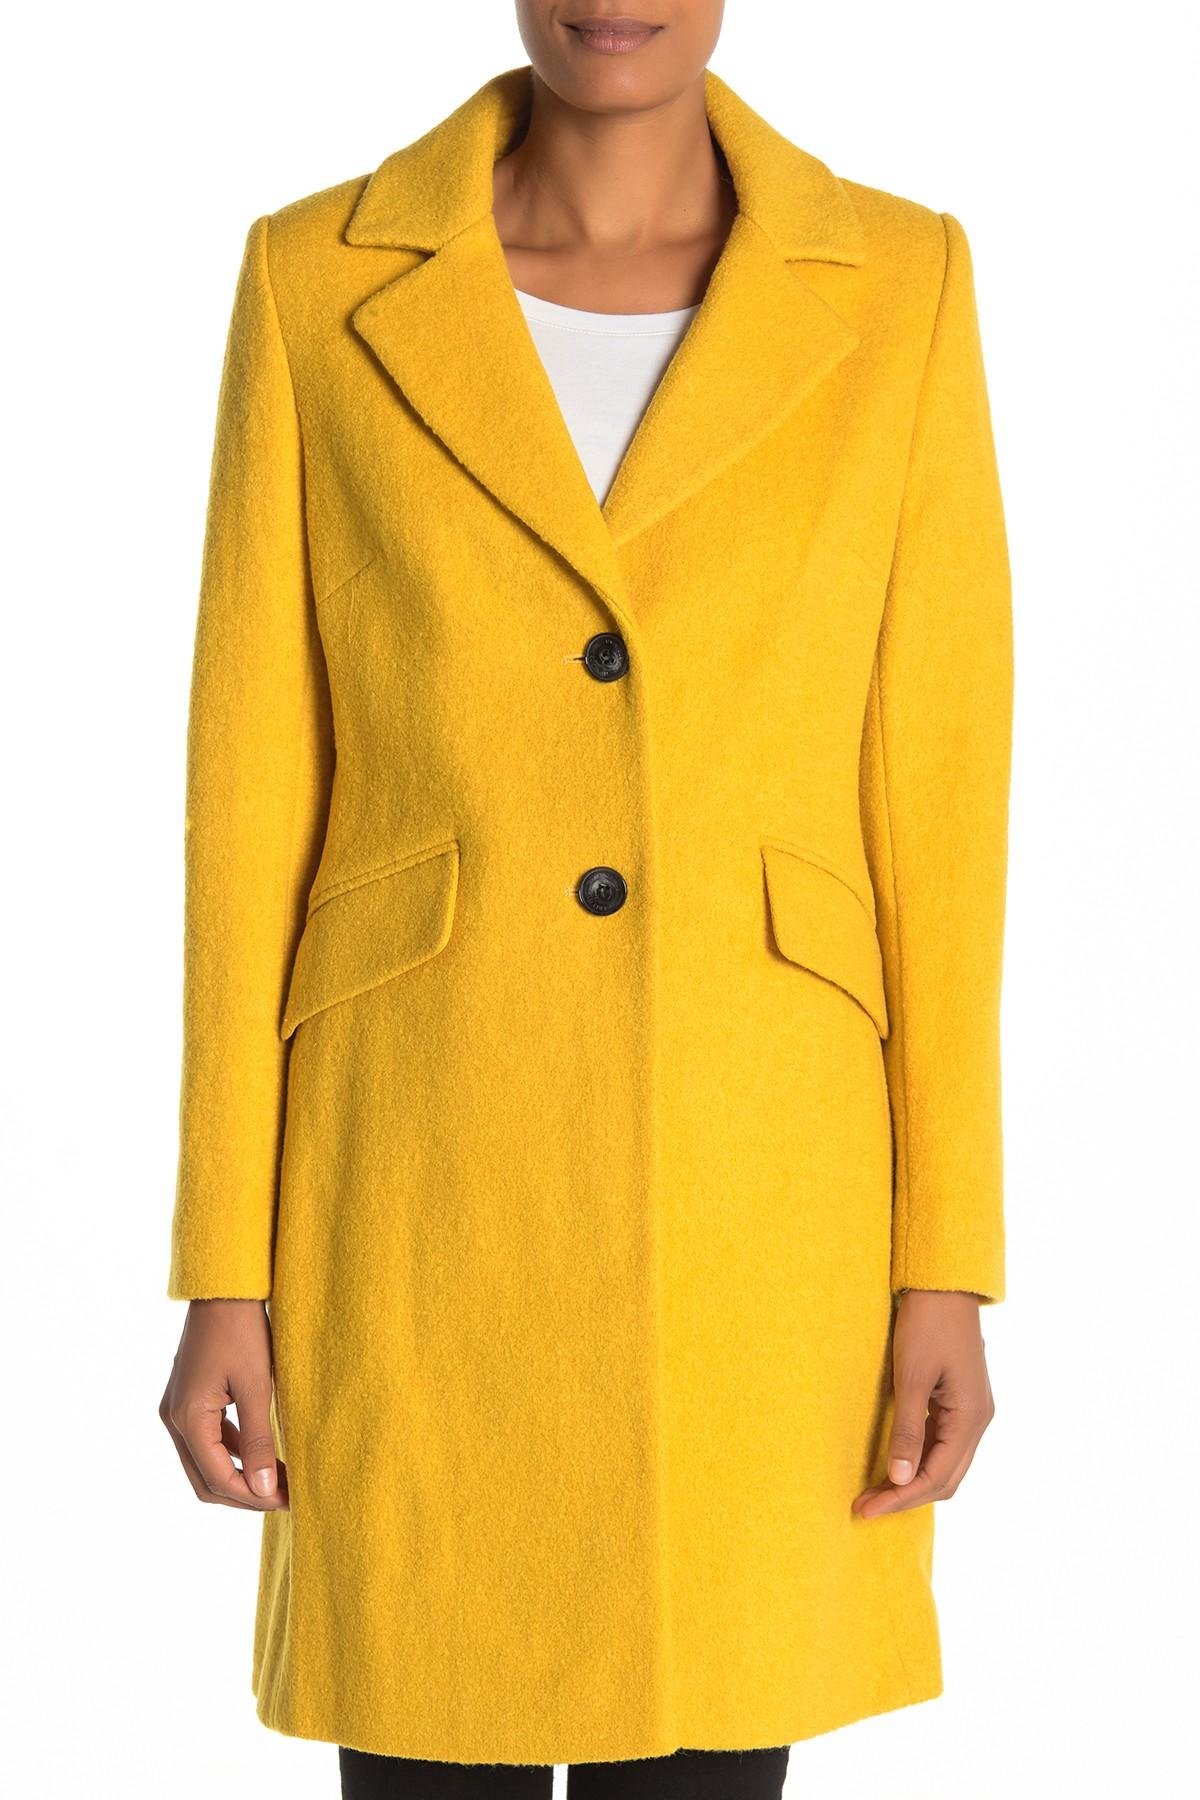 Sam Edelman Synthetic Boucle Notch Lapel Coat in Marigold (Yellow) | Lyst